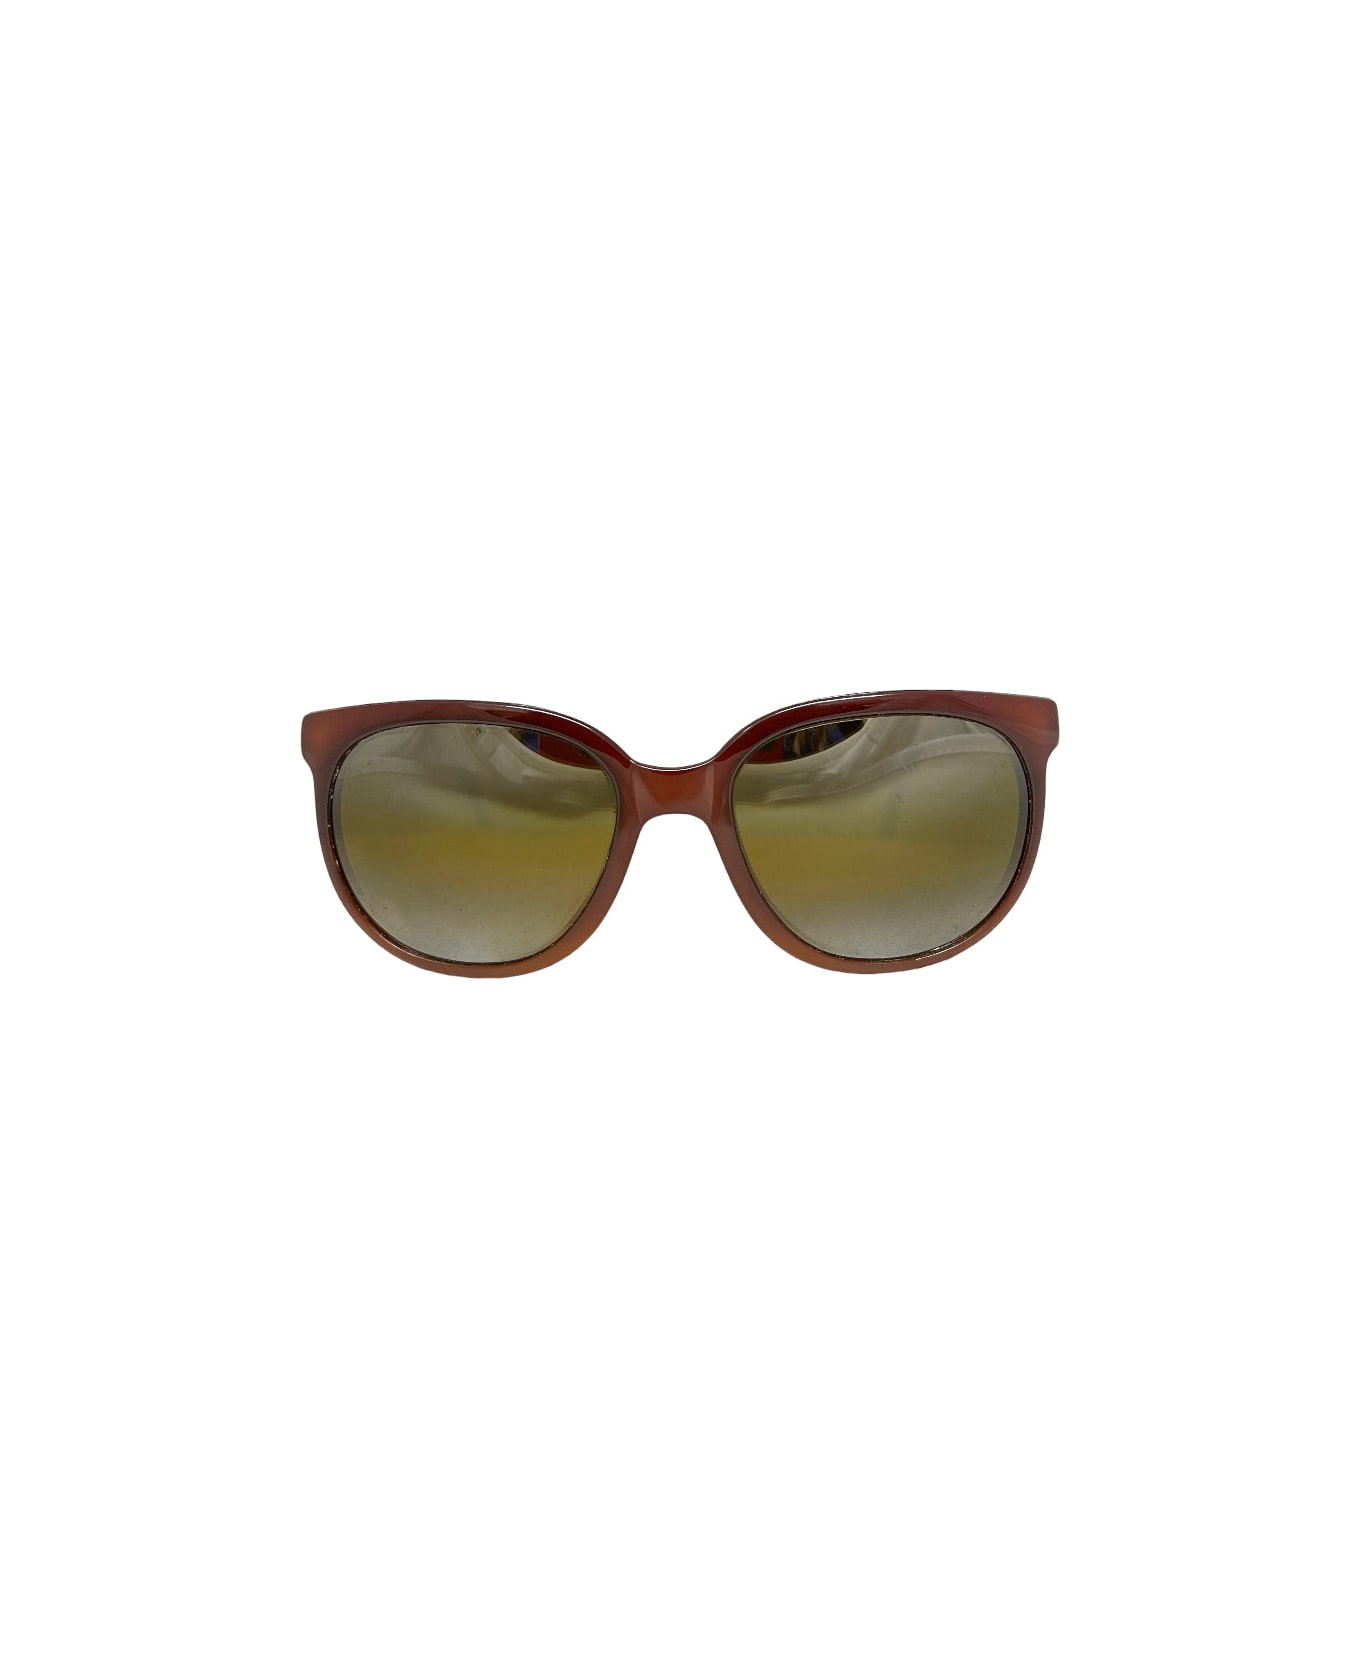 Vuarnet Pouilloux 002 - Brown Sunglasses サングラス